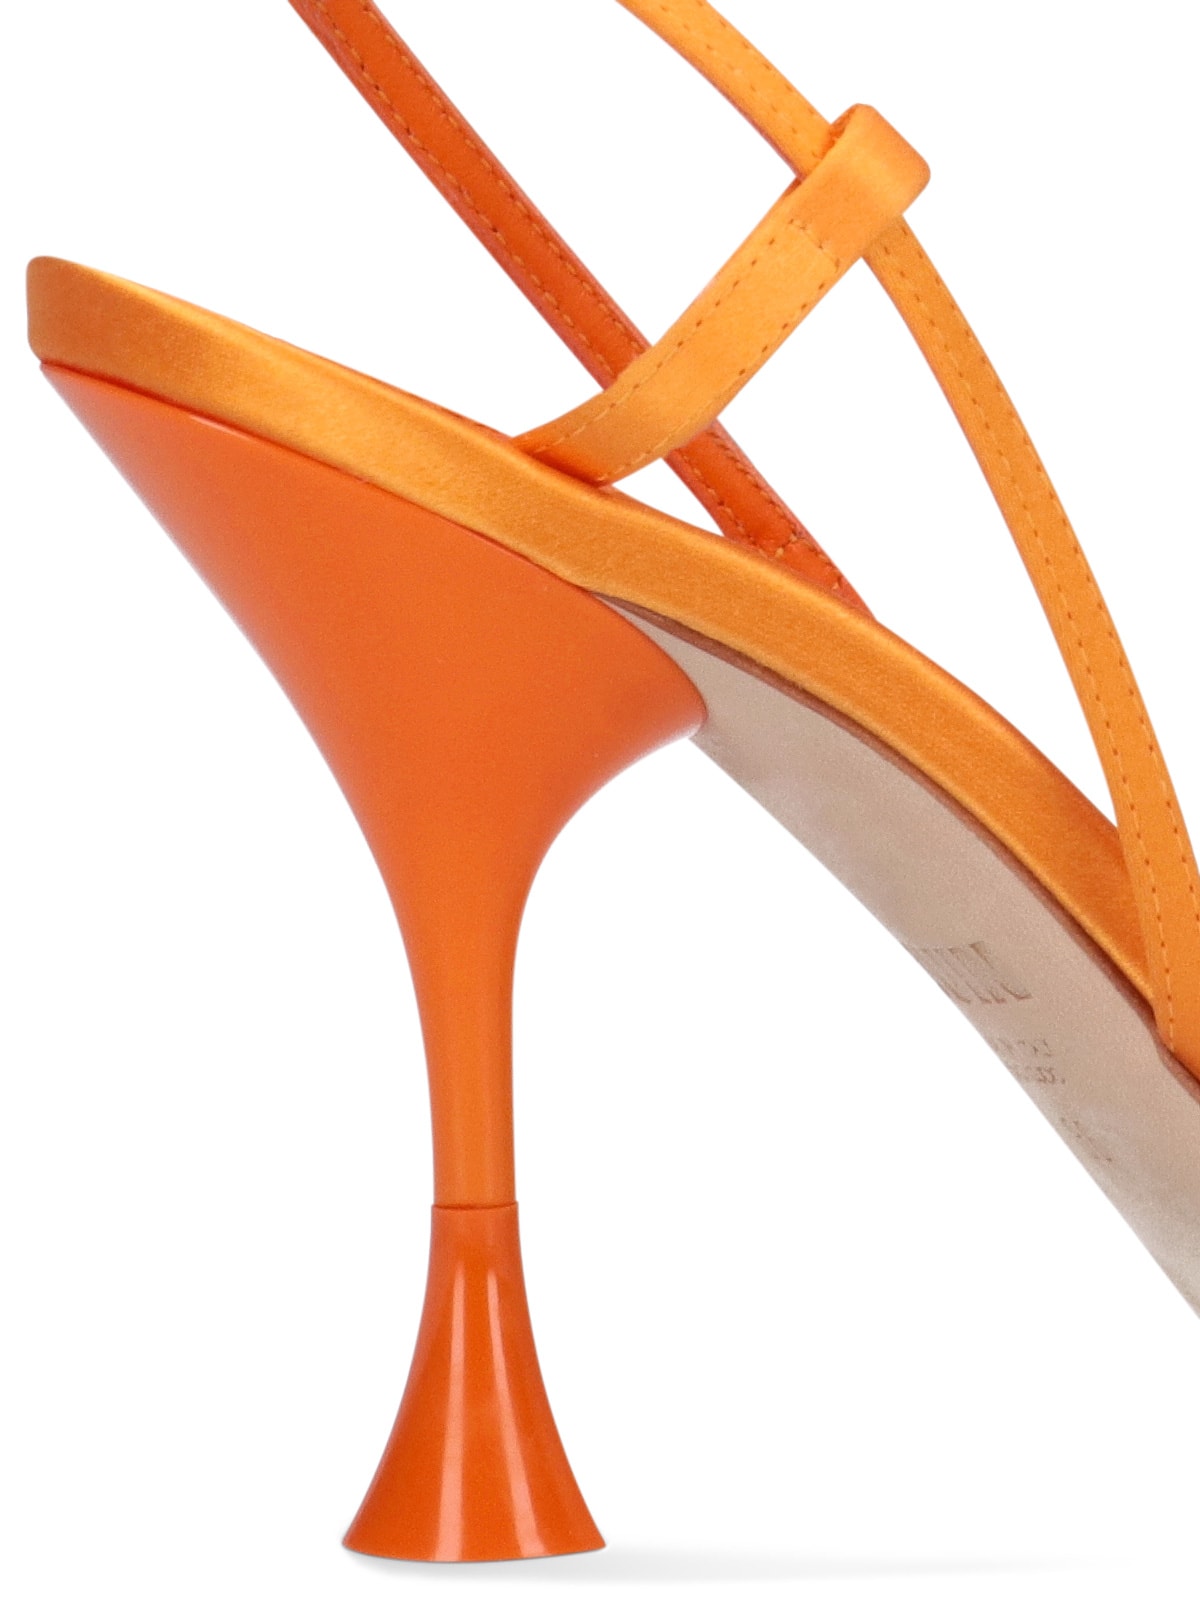 Shop 3juin Kimi Sandals In Orange